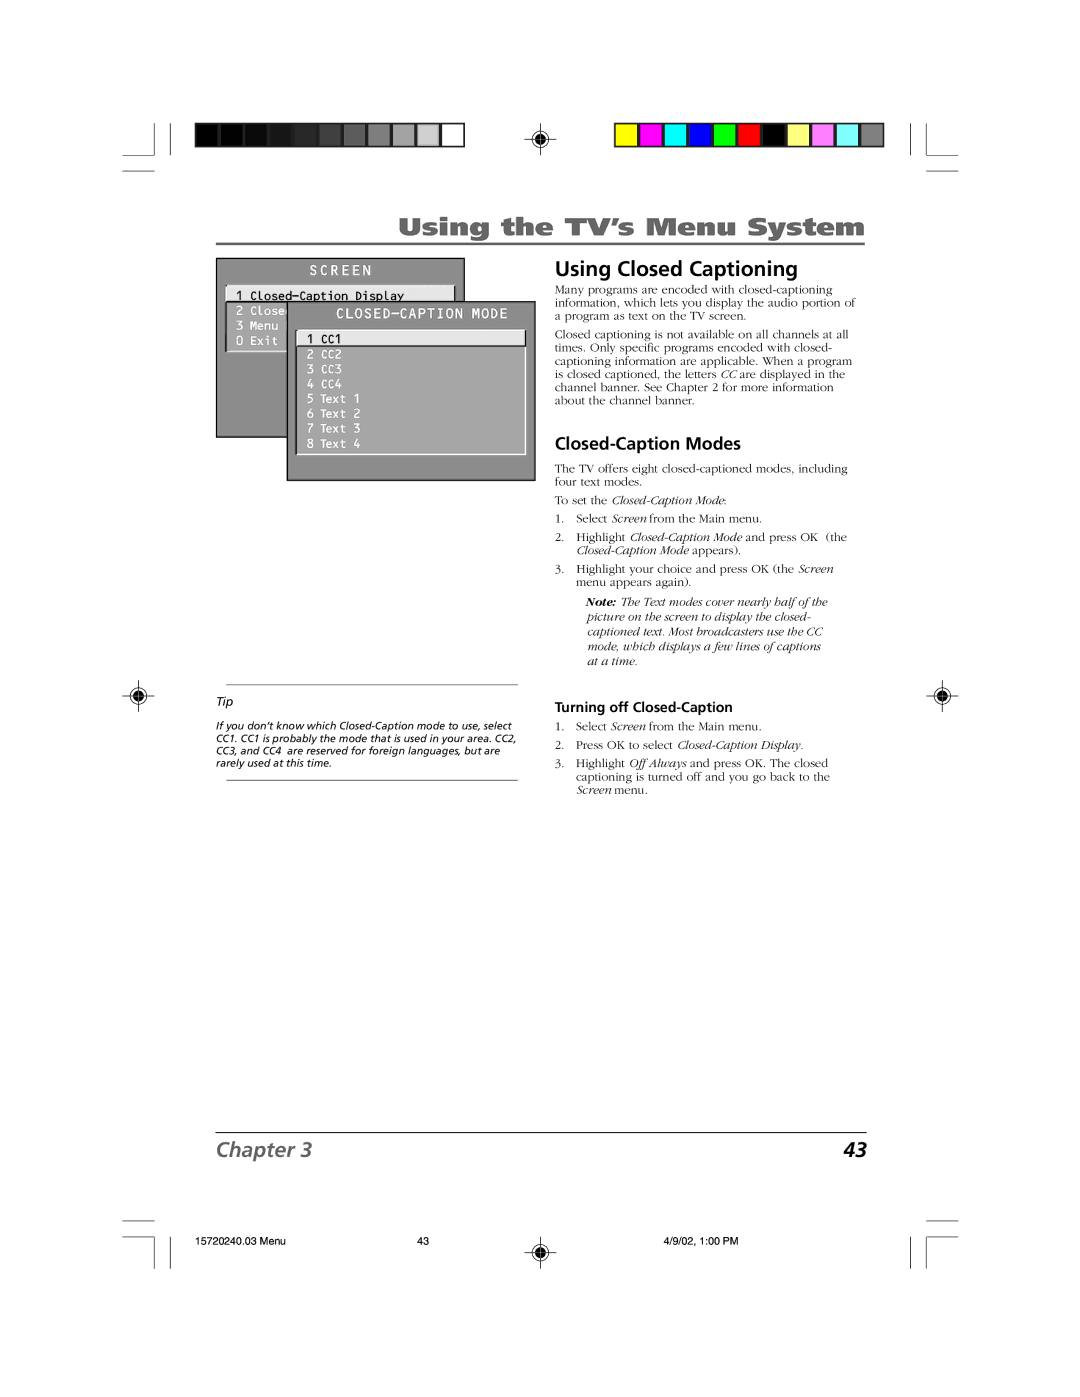 RCA F19426 manual Using Closed Captioning, Closed-Caption Modes, Turning off Closed-Caption 